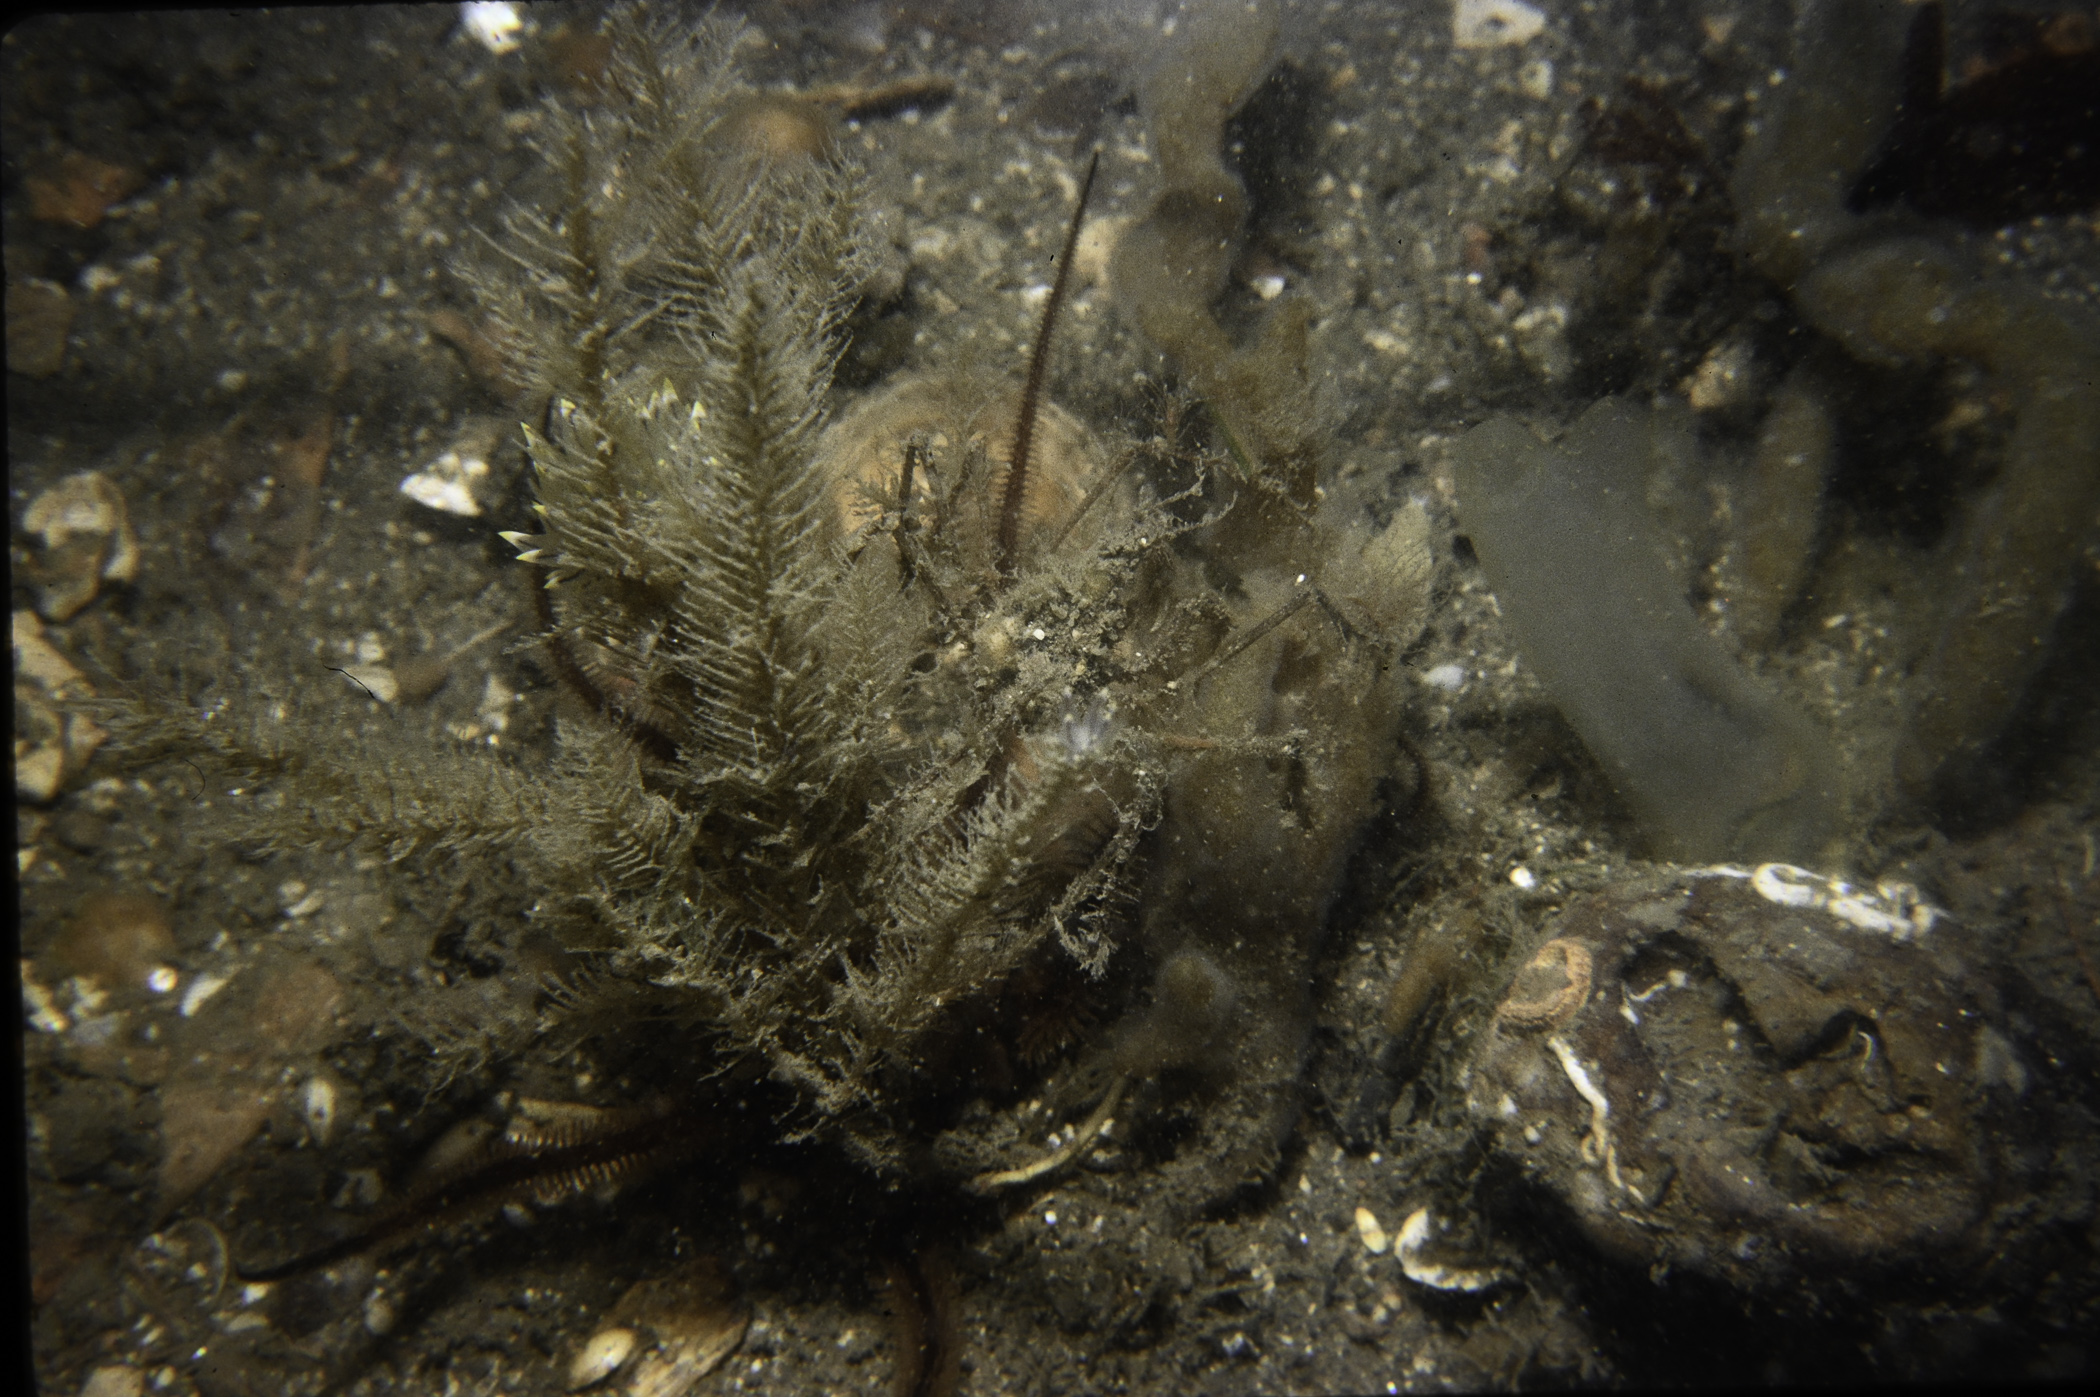 Nemertesia ramosa, Macropodia rostrata, Ophiocomina nigra. Site: Marlfield Bay, Strangford Lough. 